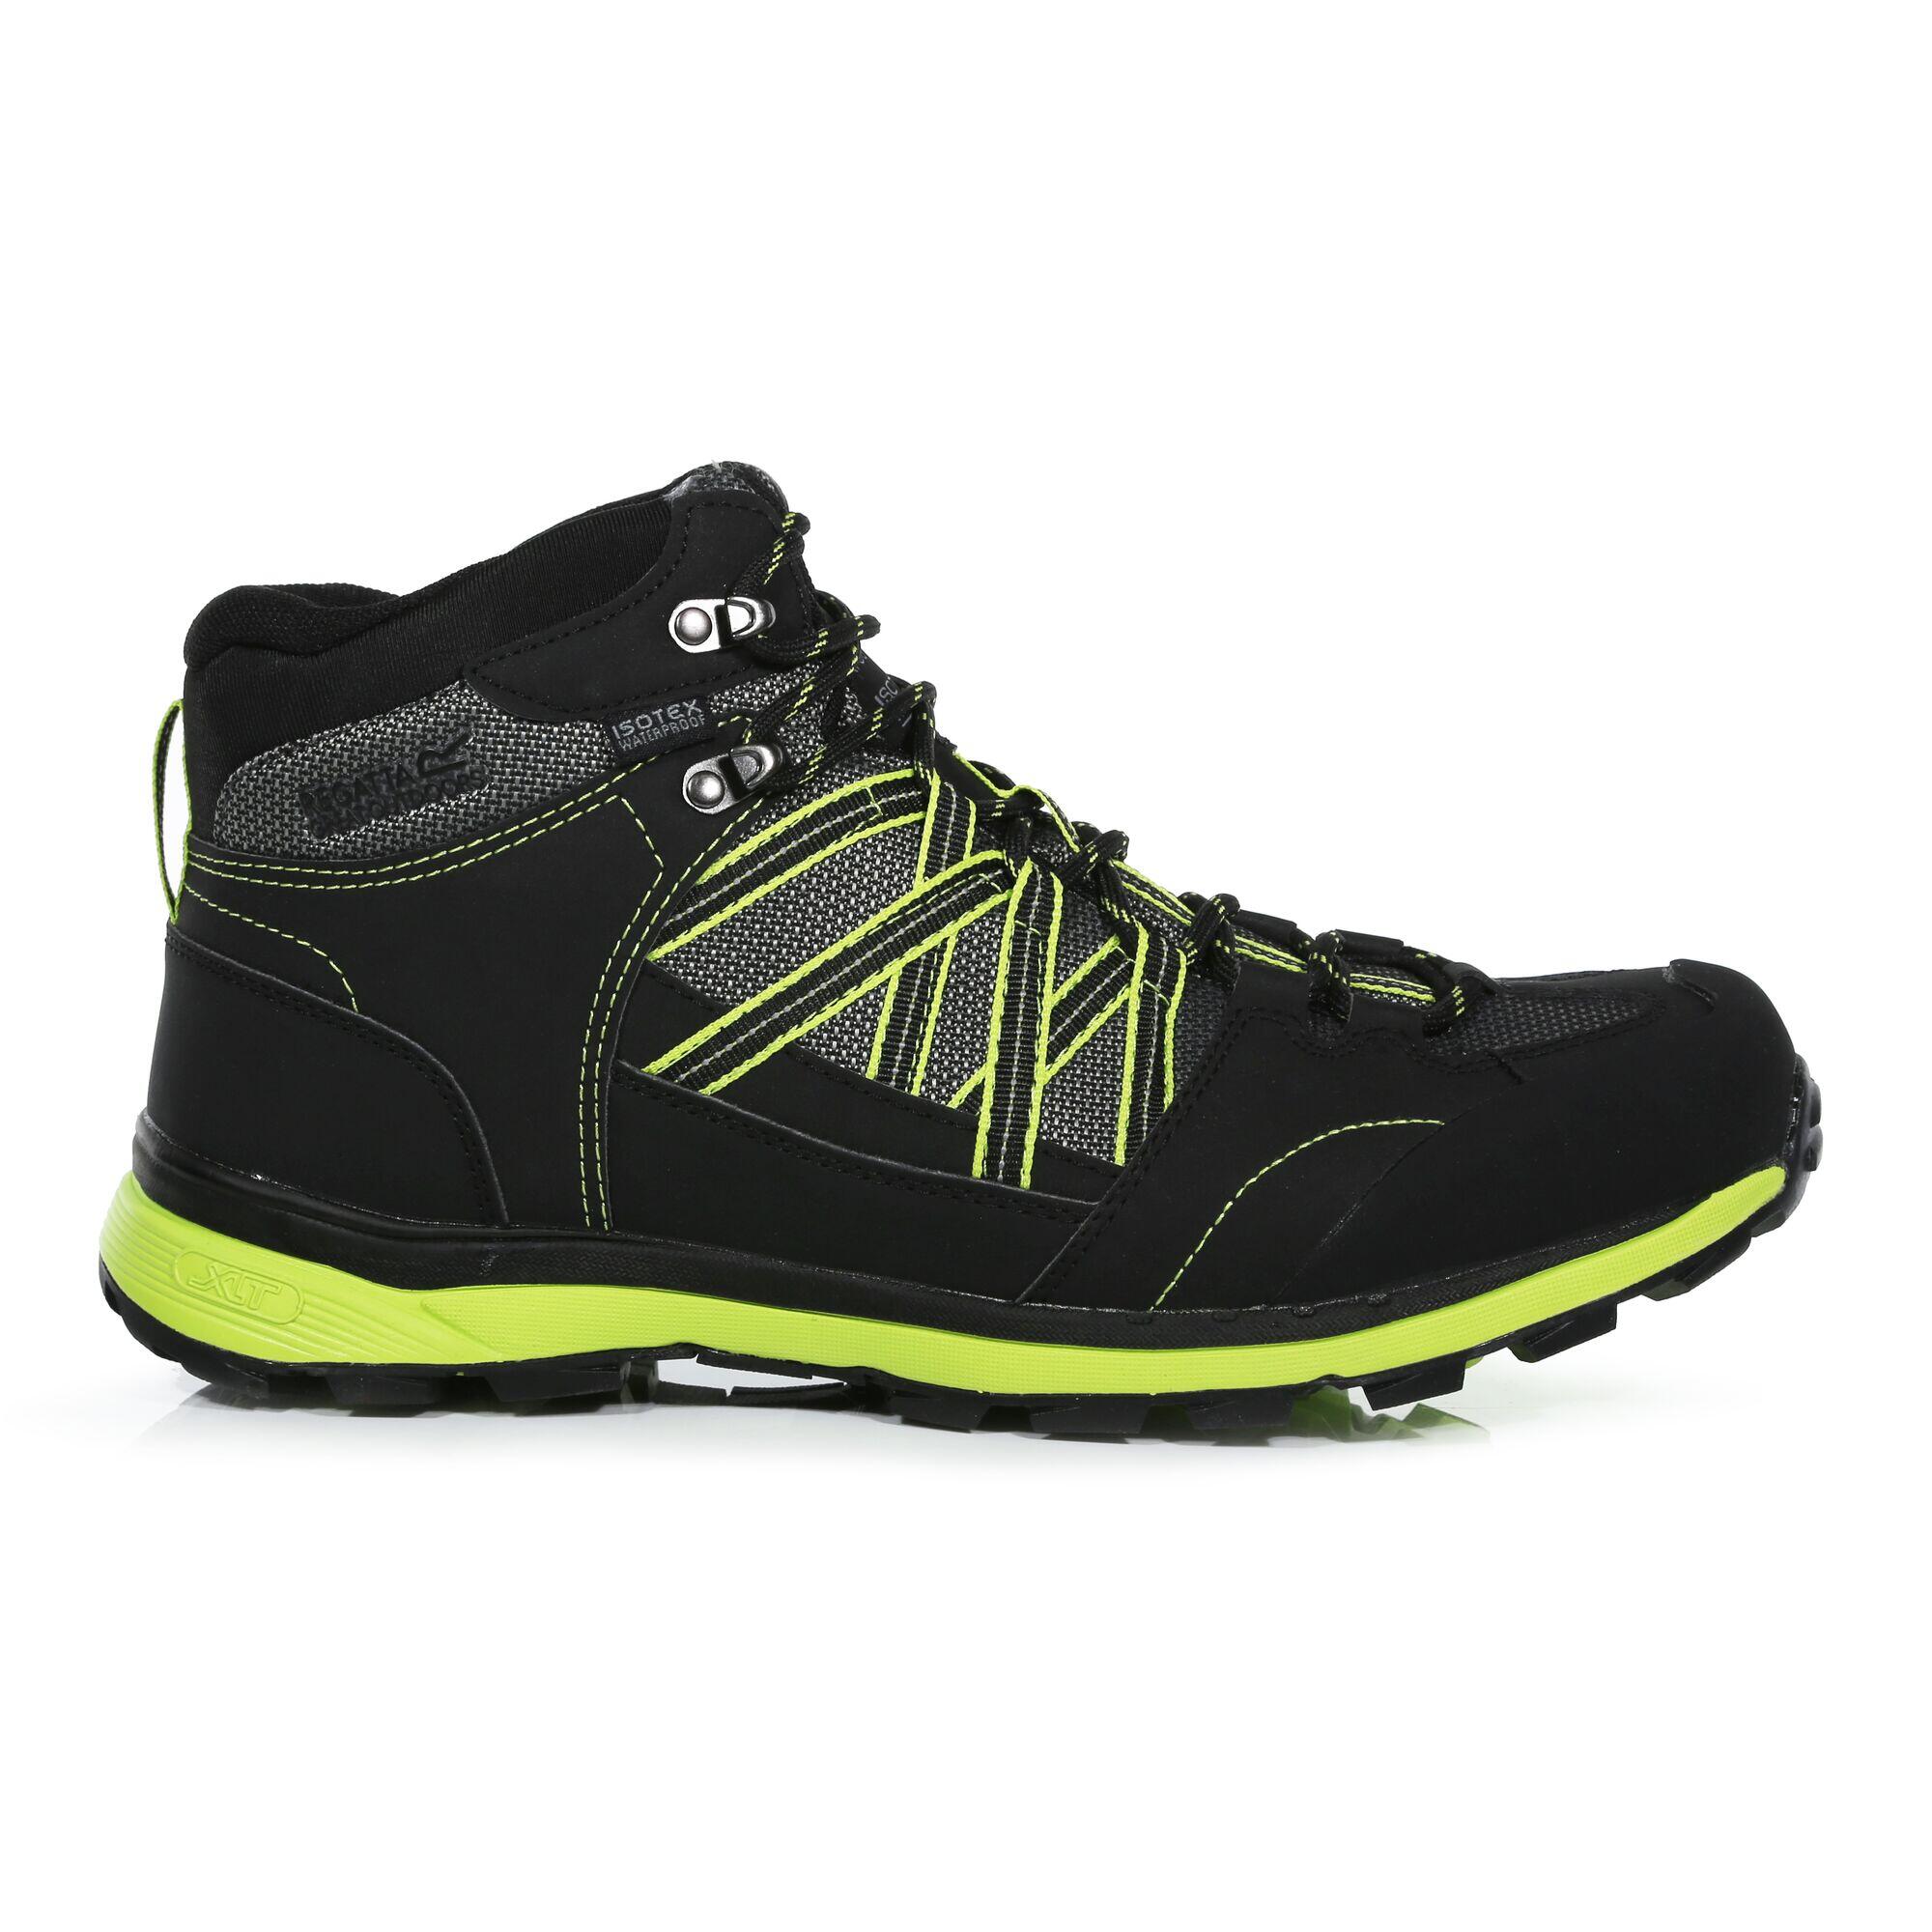 Samaris II Men's Hiking Boots - Black/Light Green 2/6